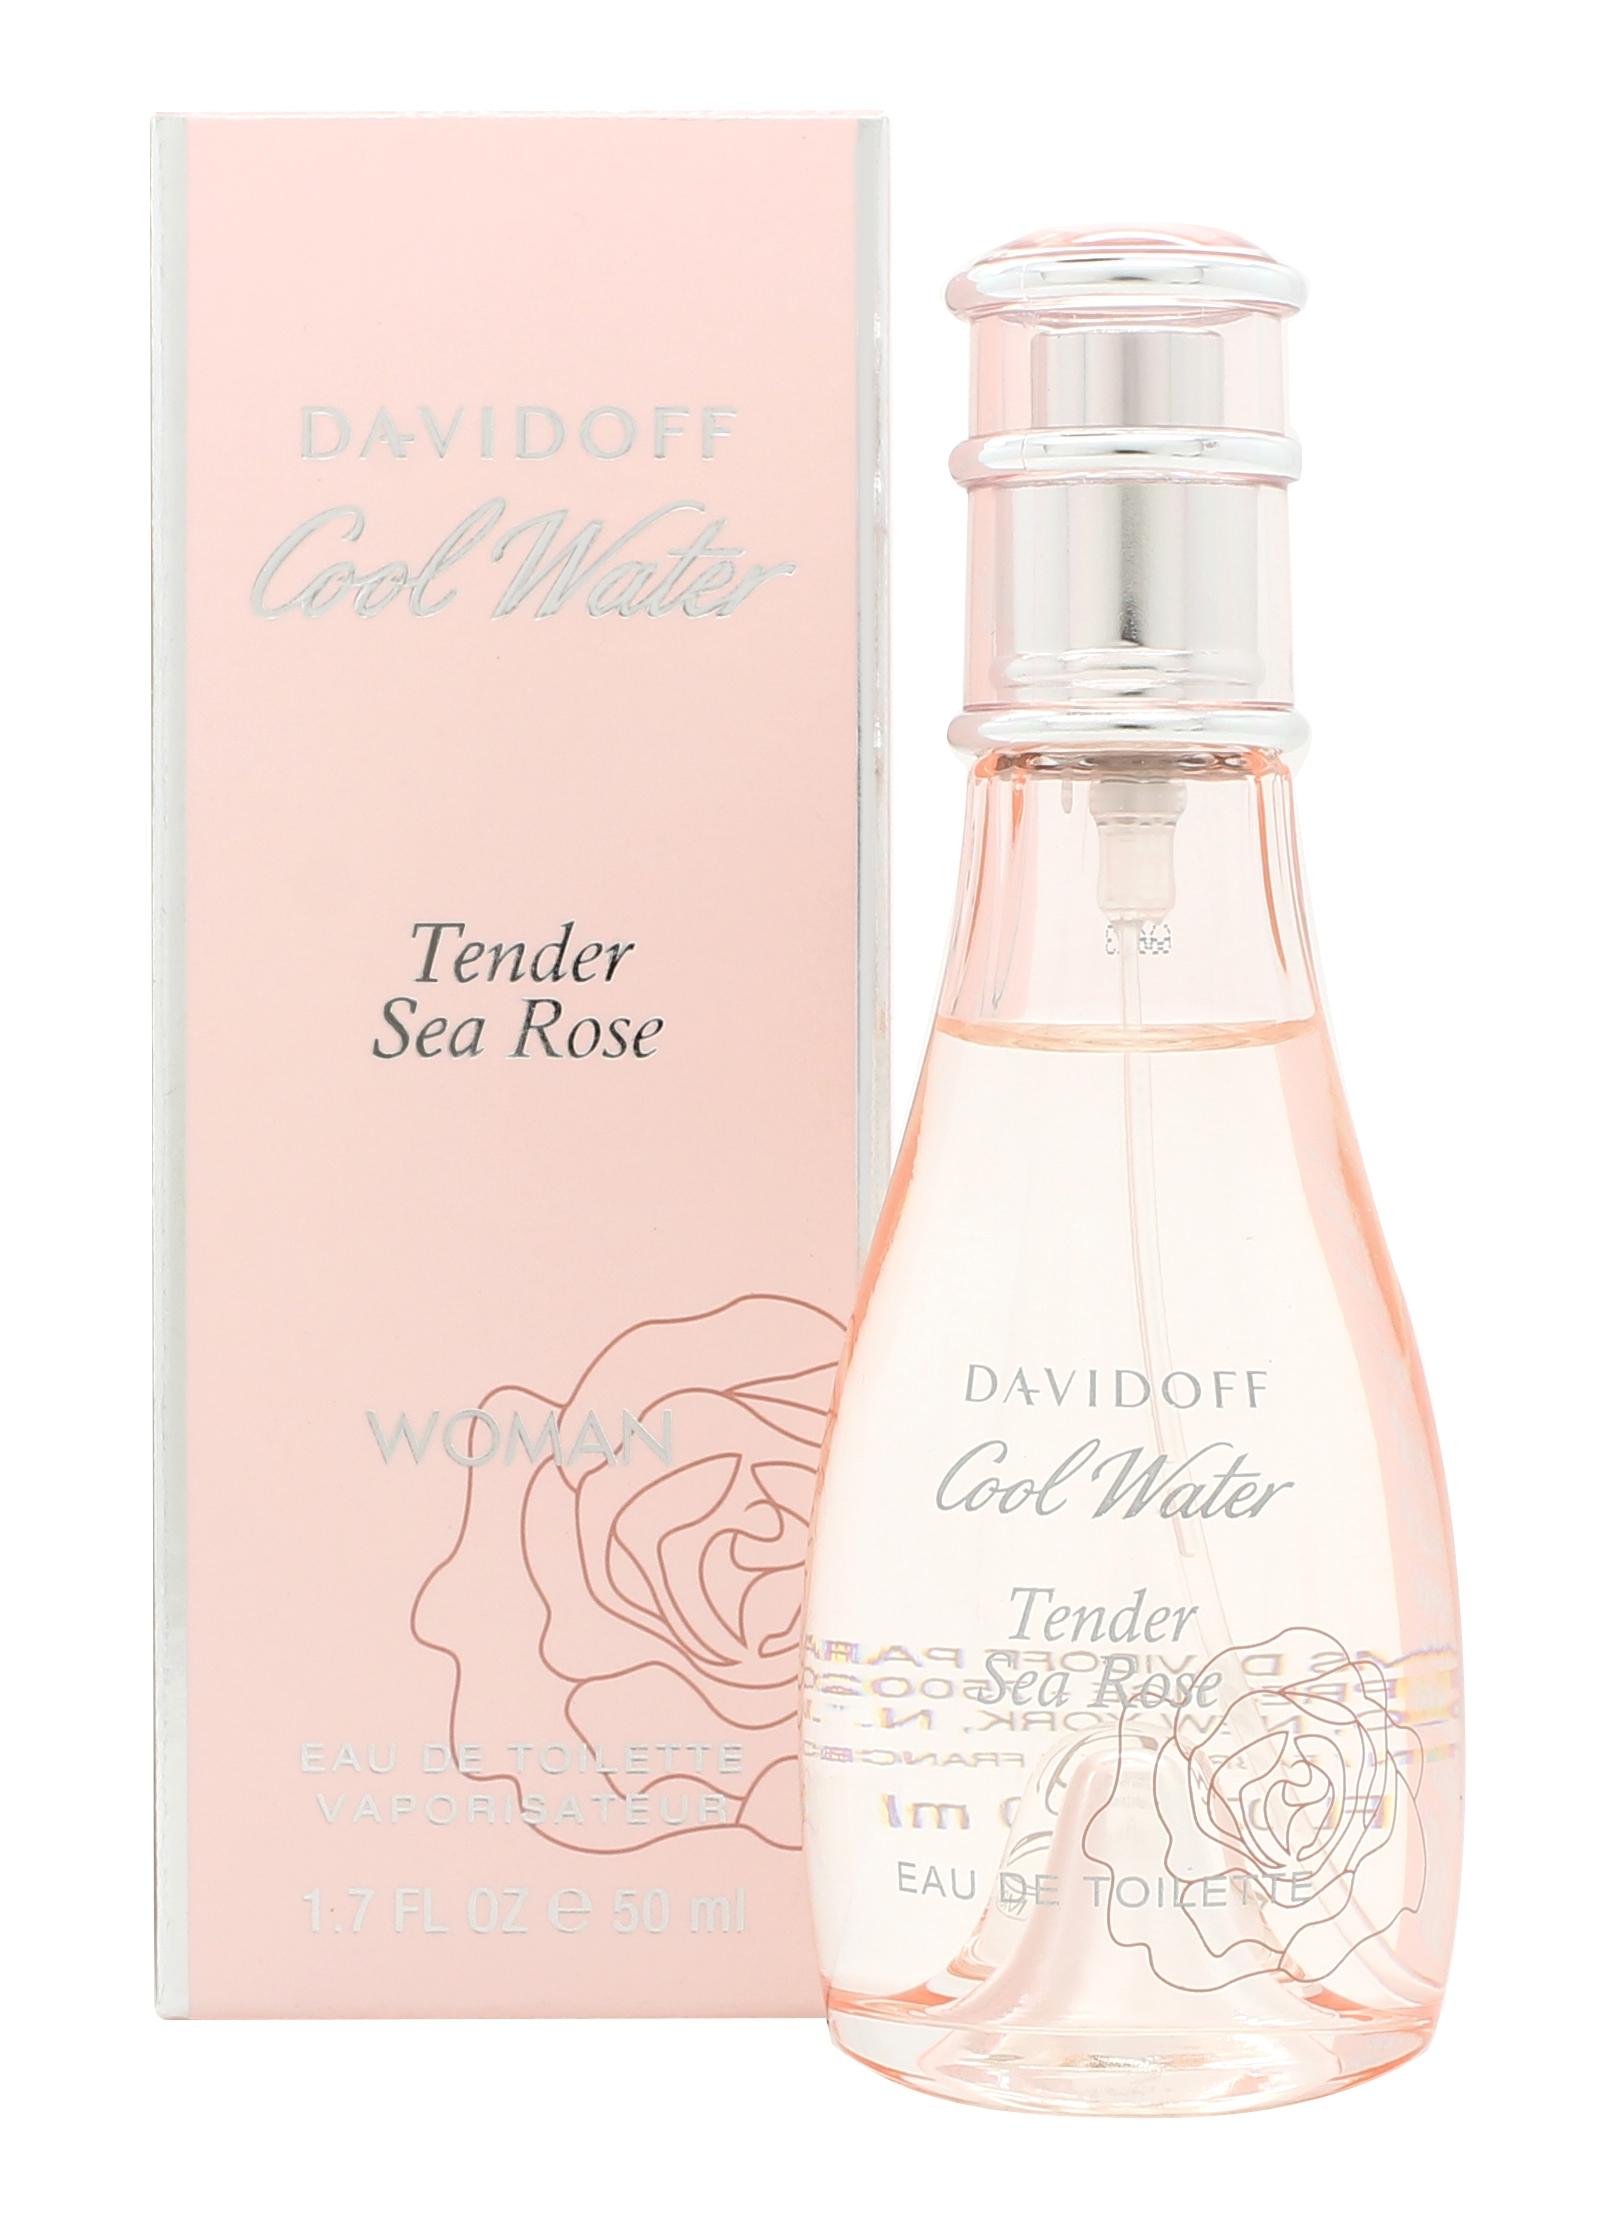 Davidoff Cool Water Woman Tender Sea Rose Eau de Toilette 50ml Spray